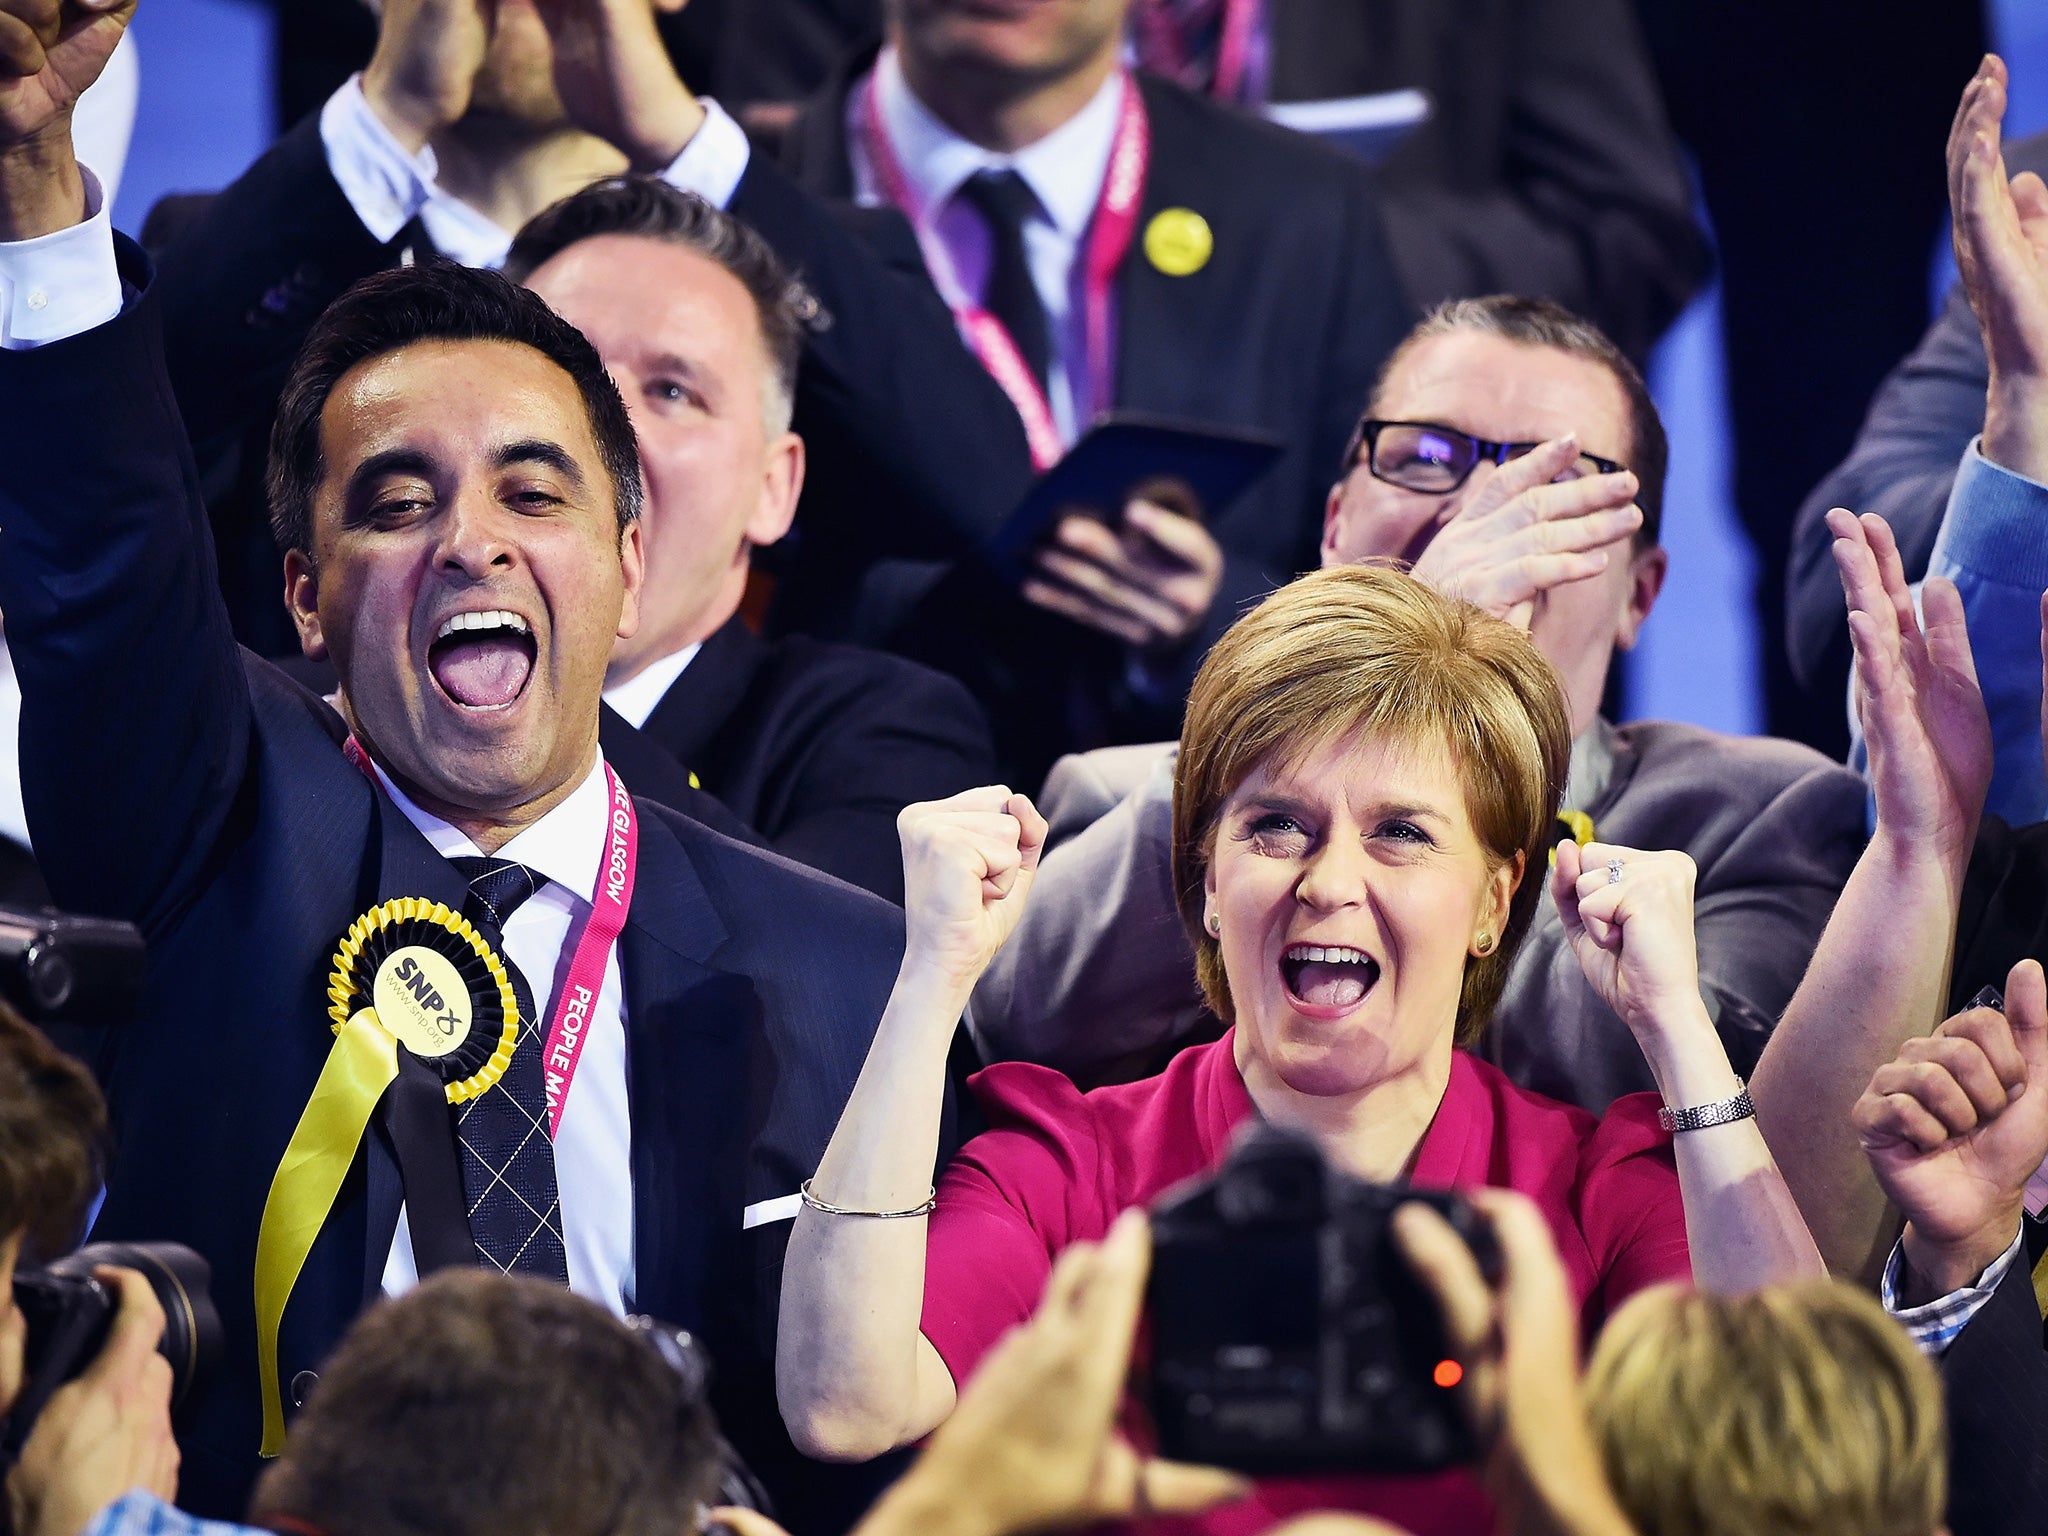 The SNP had an astonishing election night